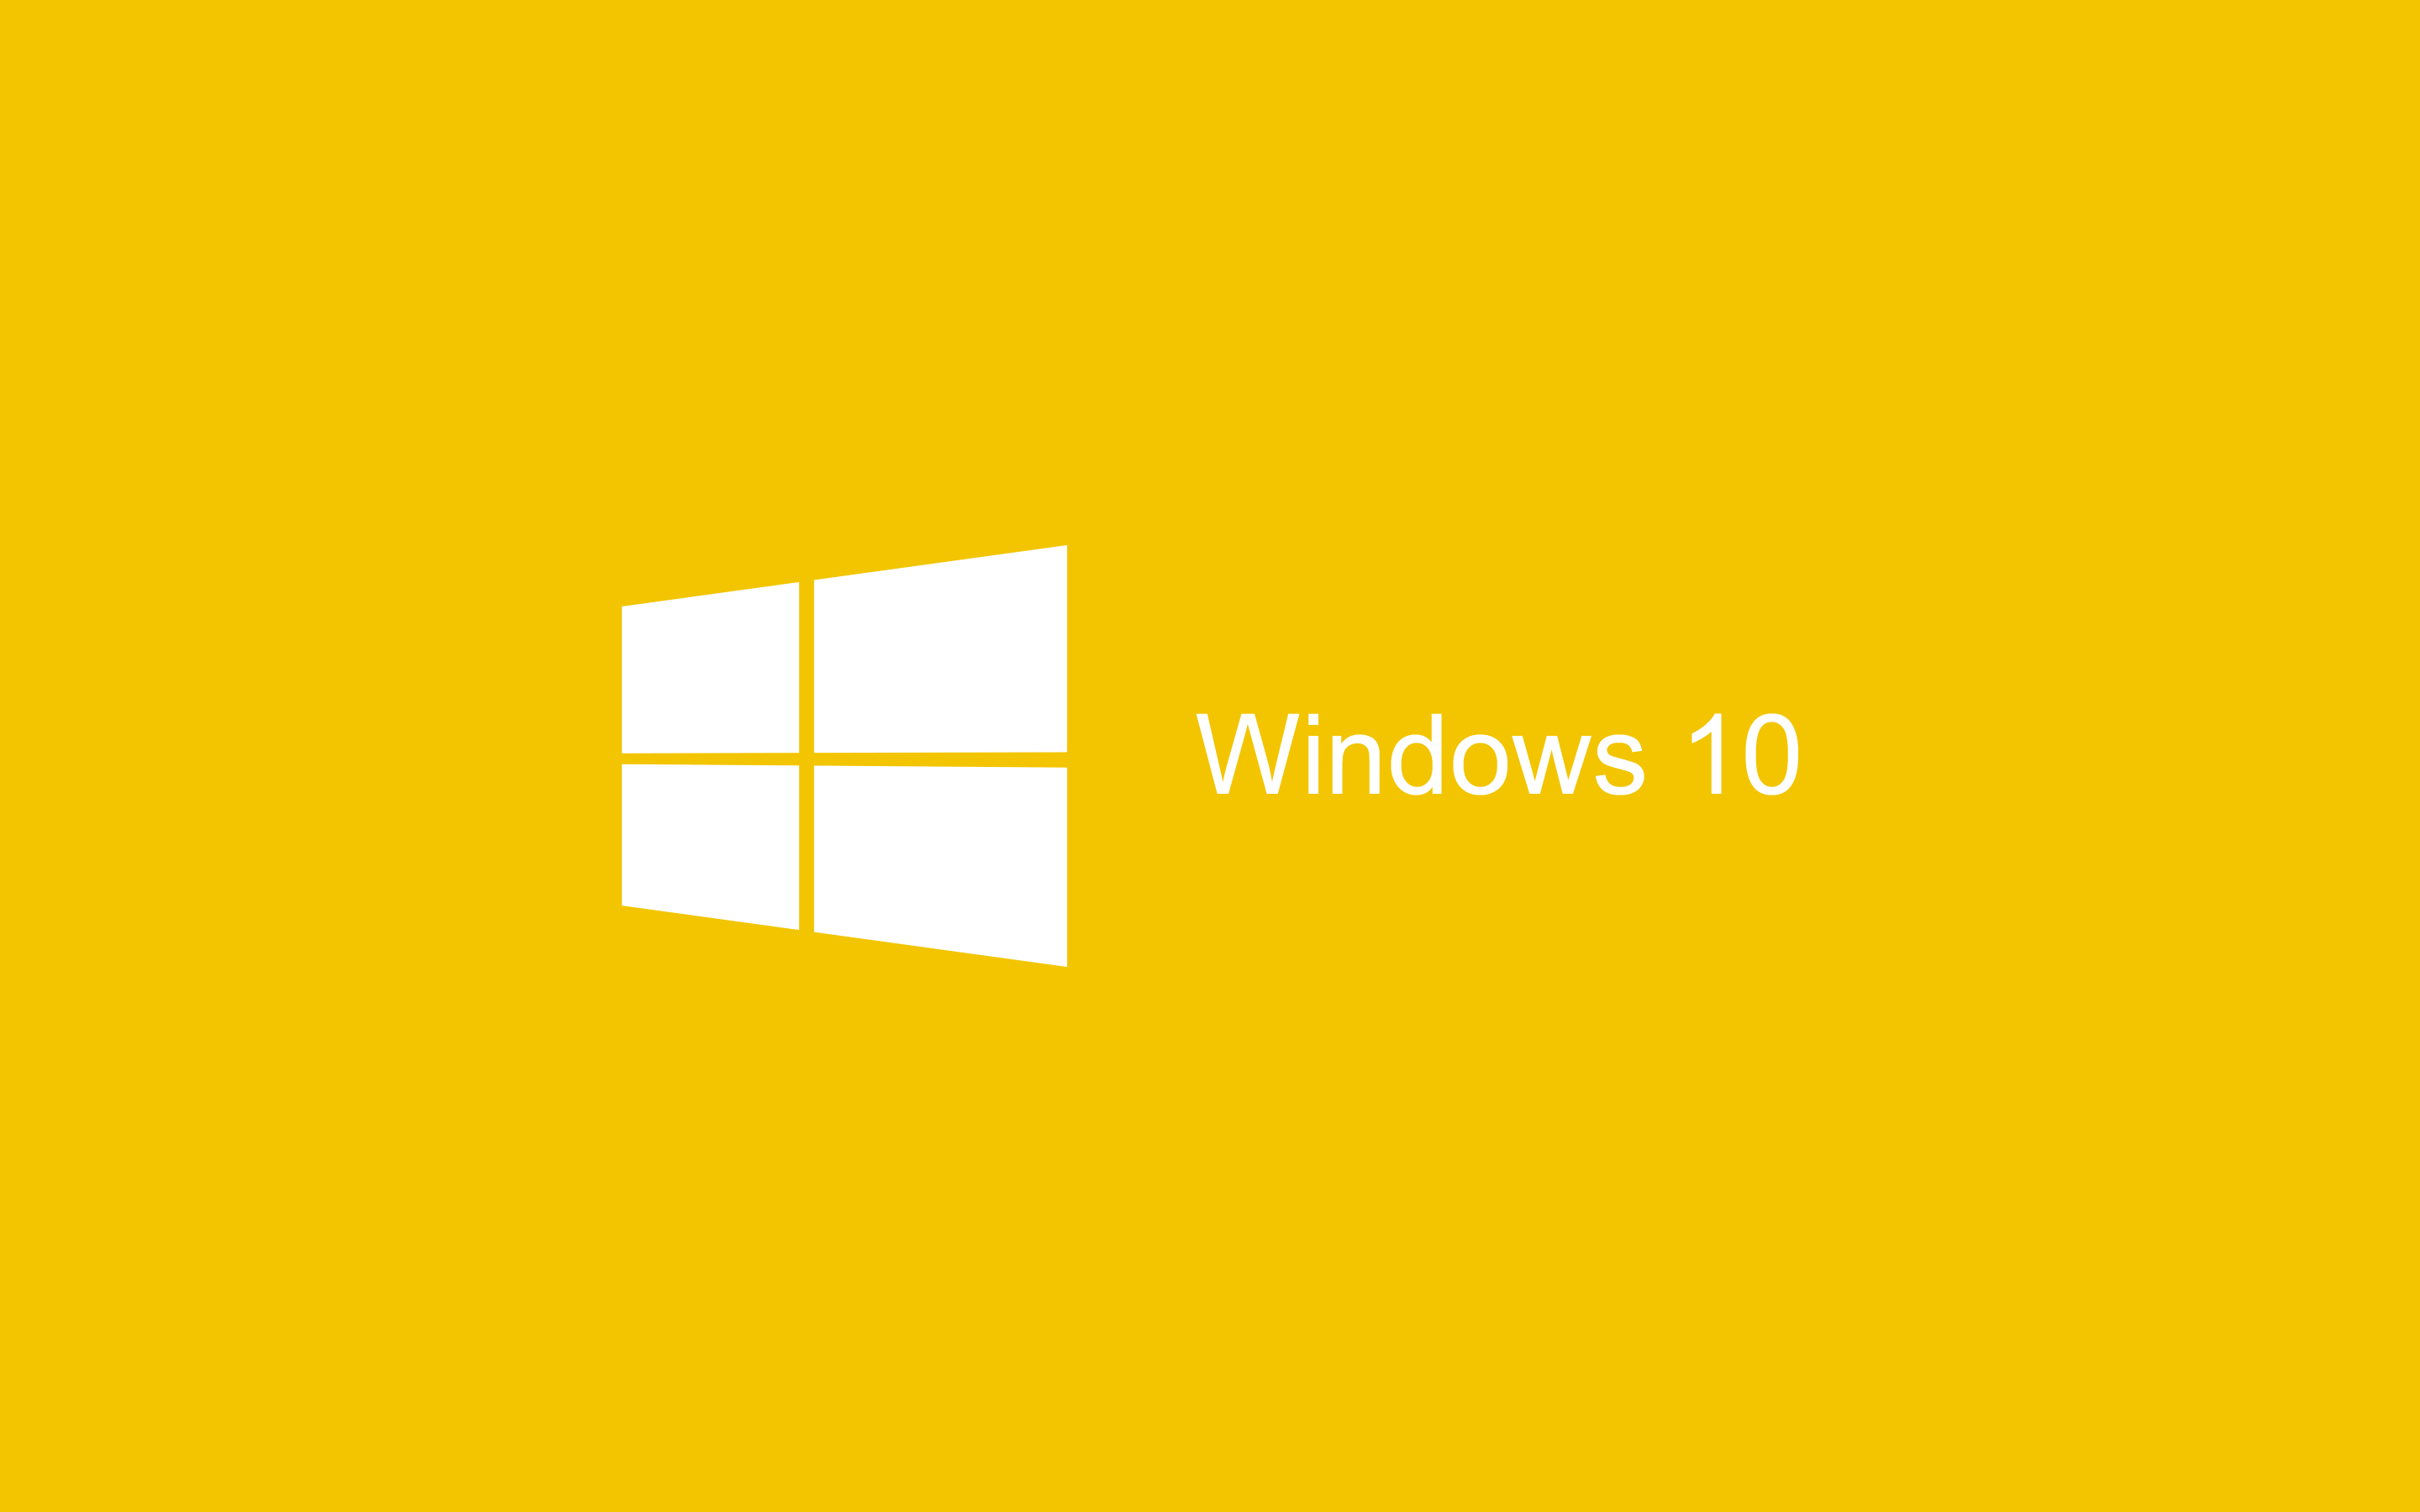 New Yellow Windows Wallpaper Desktop With